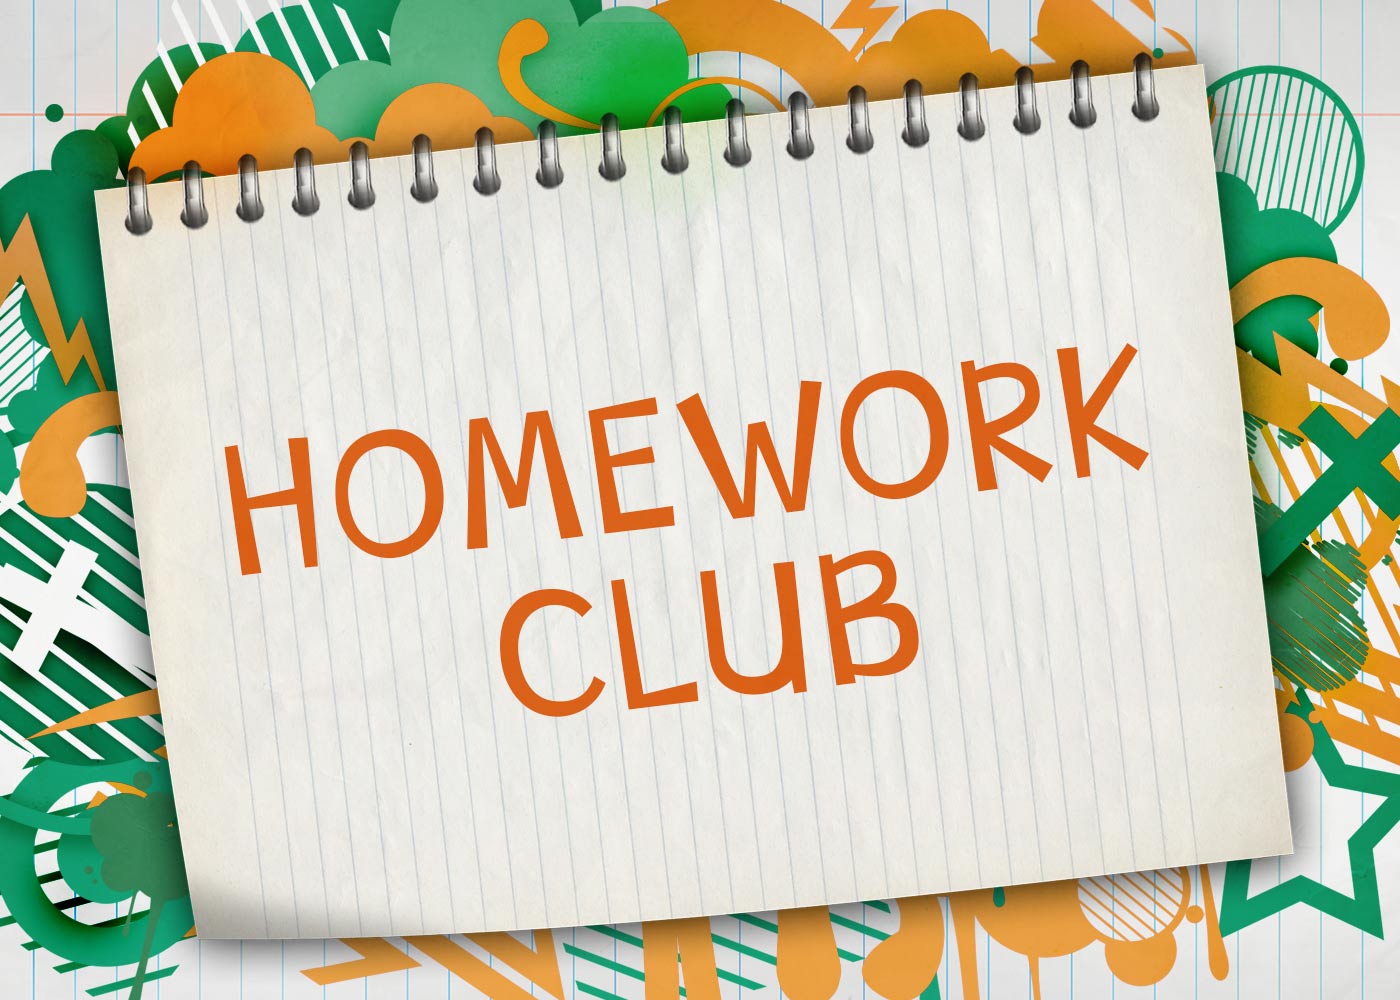 homework club youghal